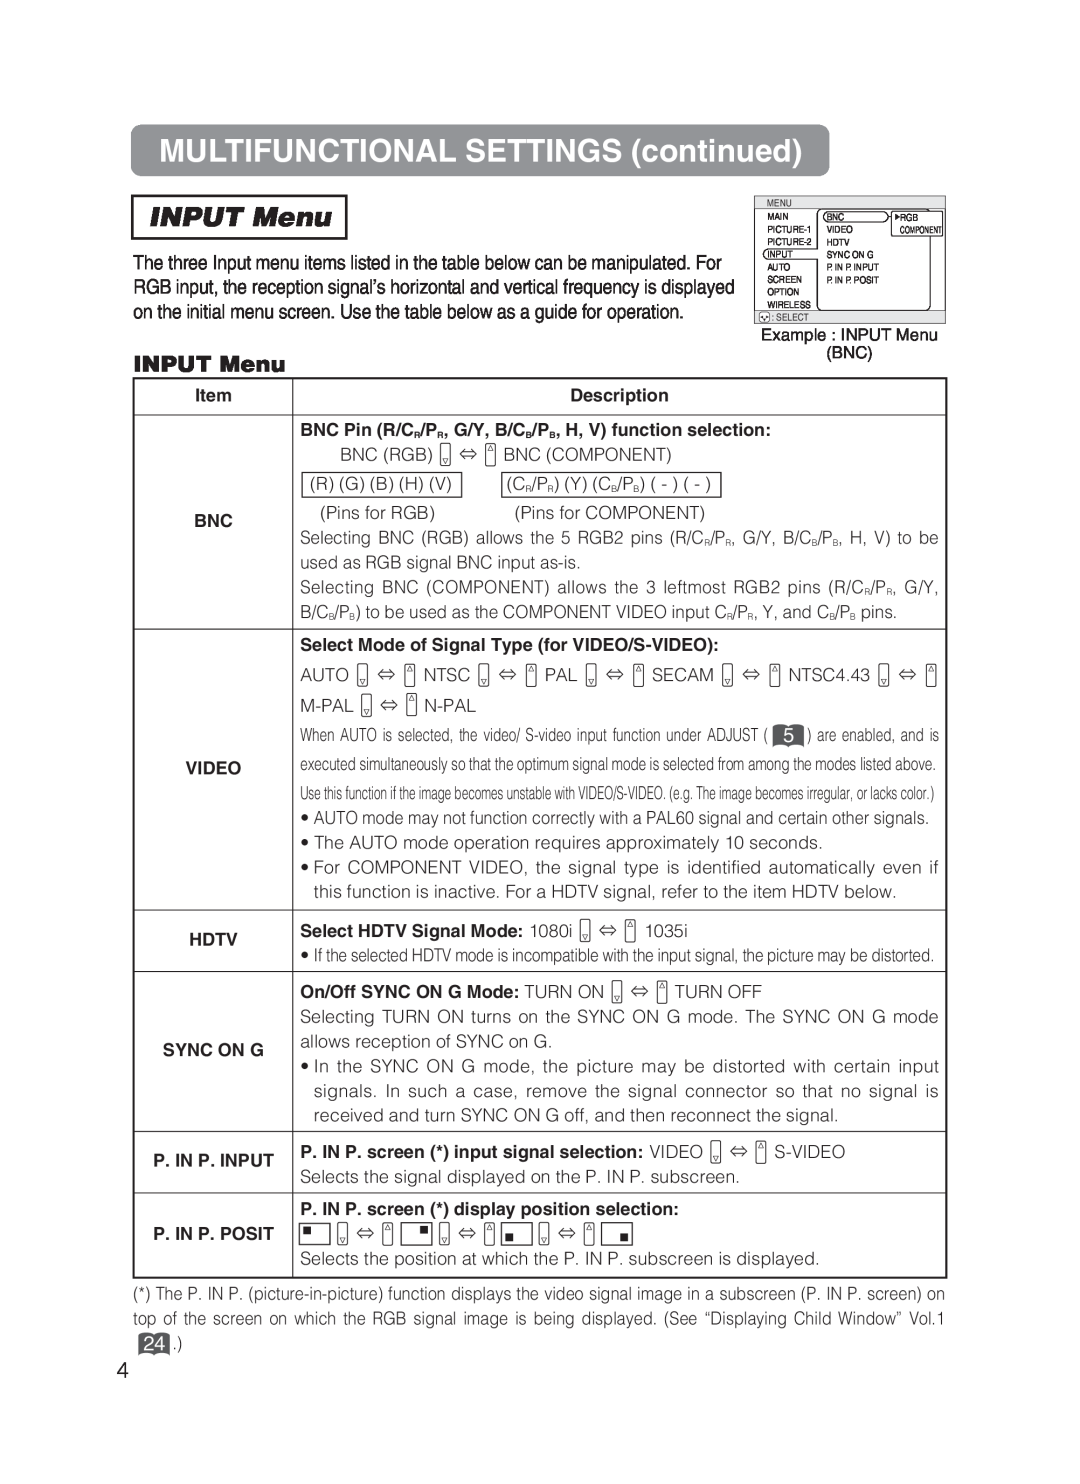 Hitachi CP-X870 user manual MULTIFUNCTIONAL SETTINGS continued, INPUT Menu 